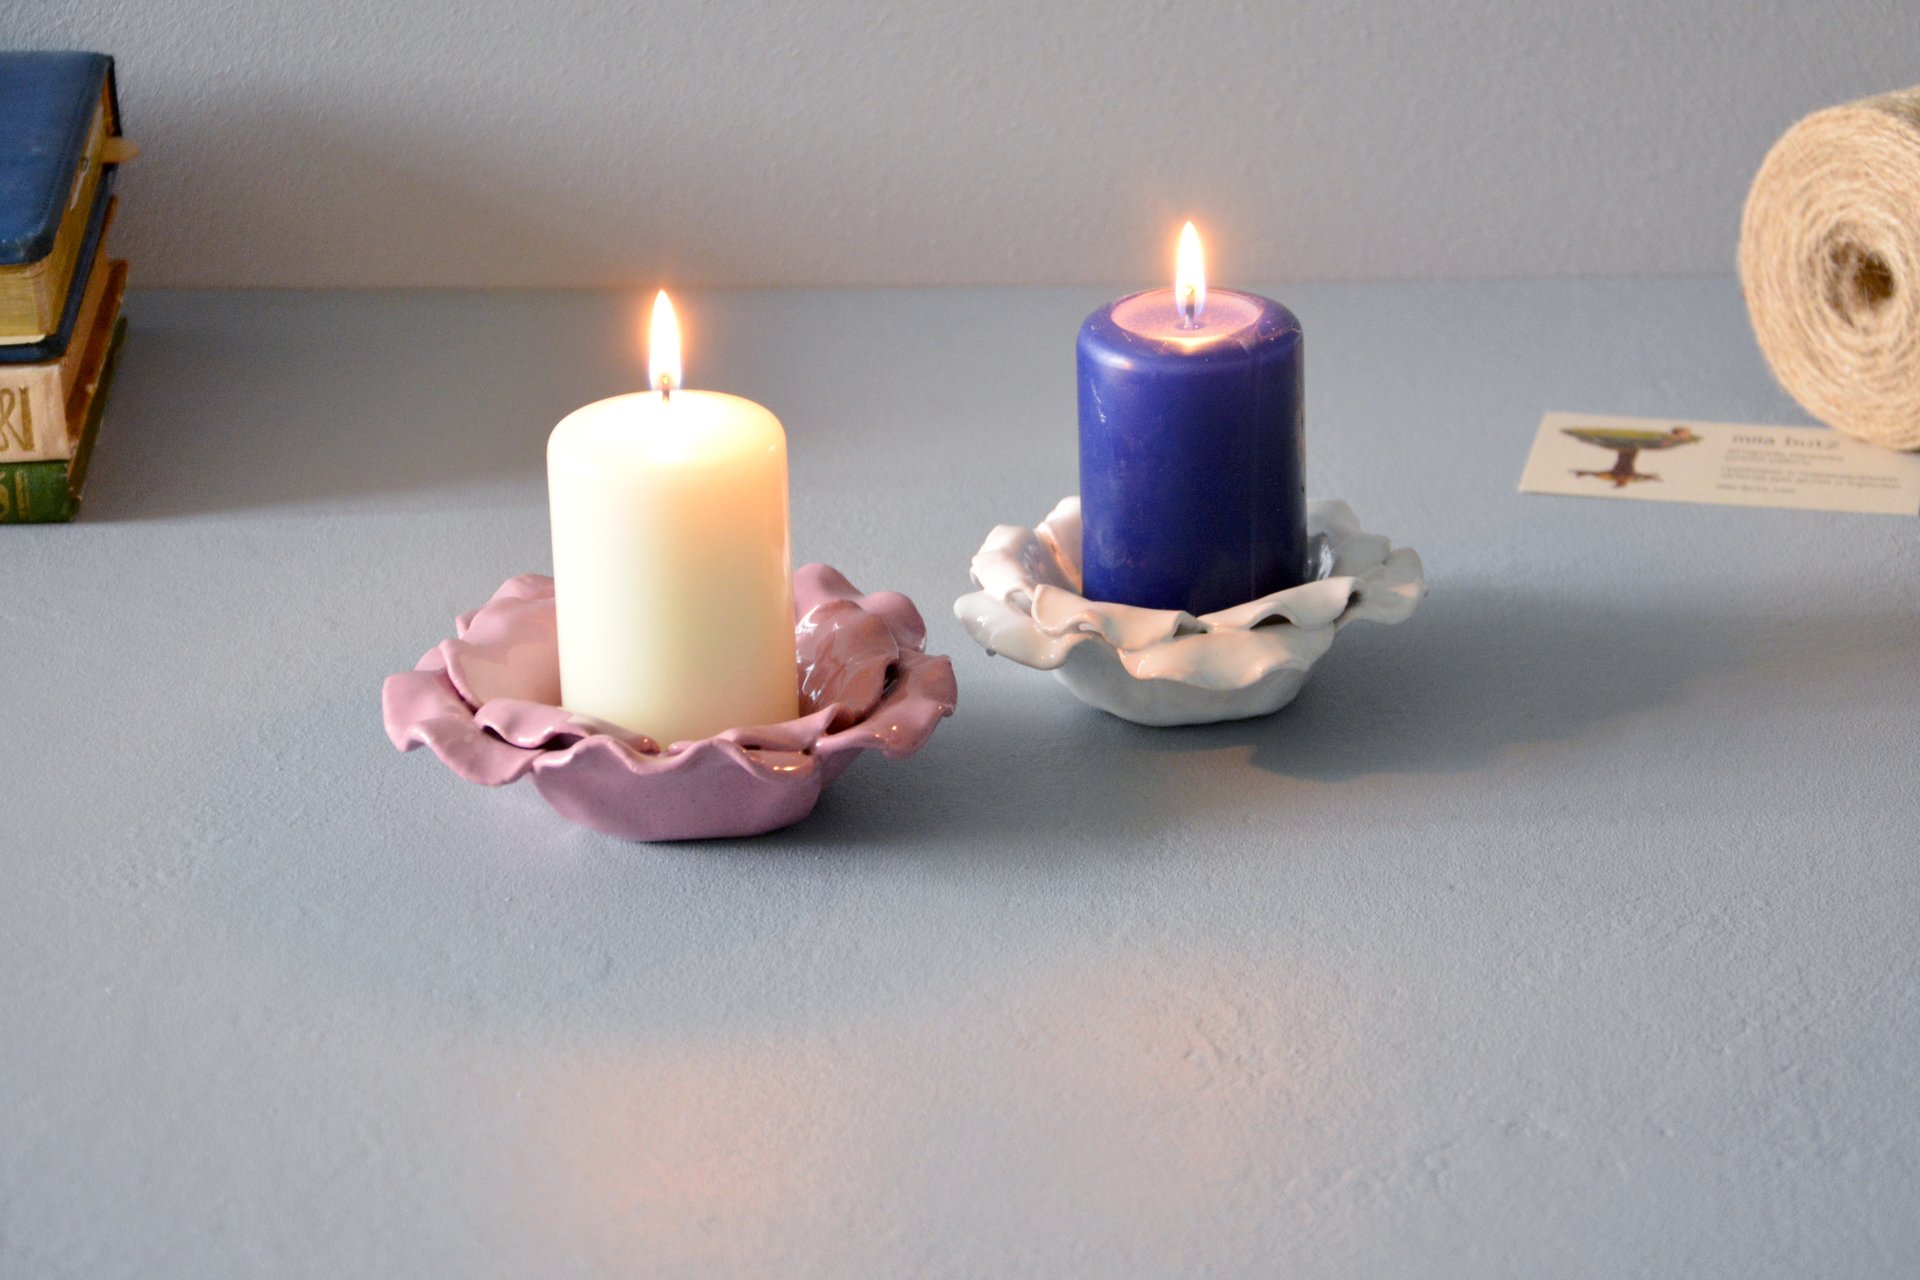 Candlestick White flower - Ceramic Candl-holders, diameter - 11.5 cm, photo 5 of 5.